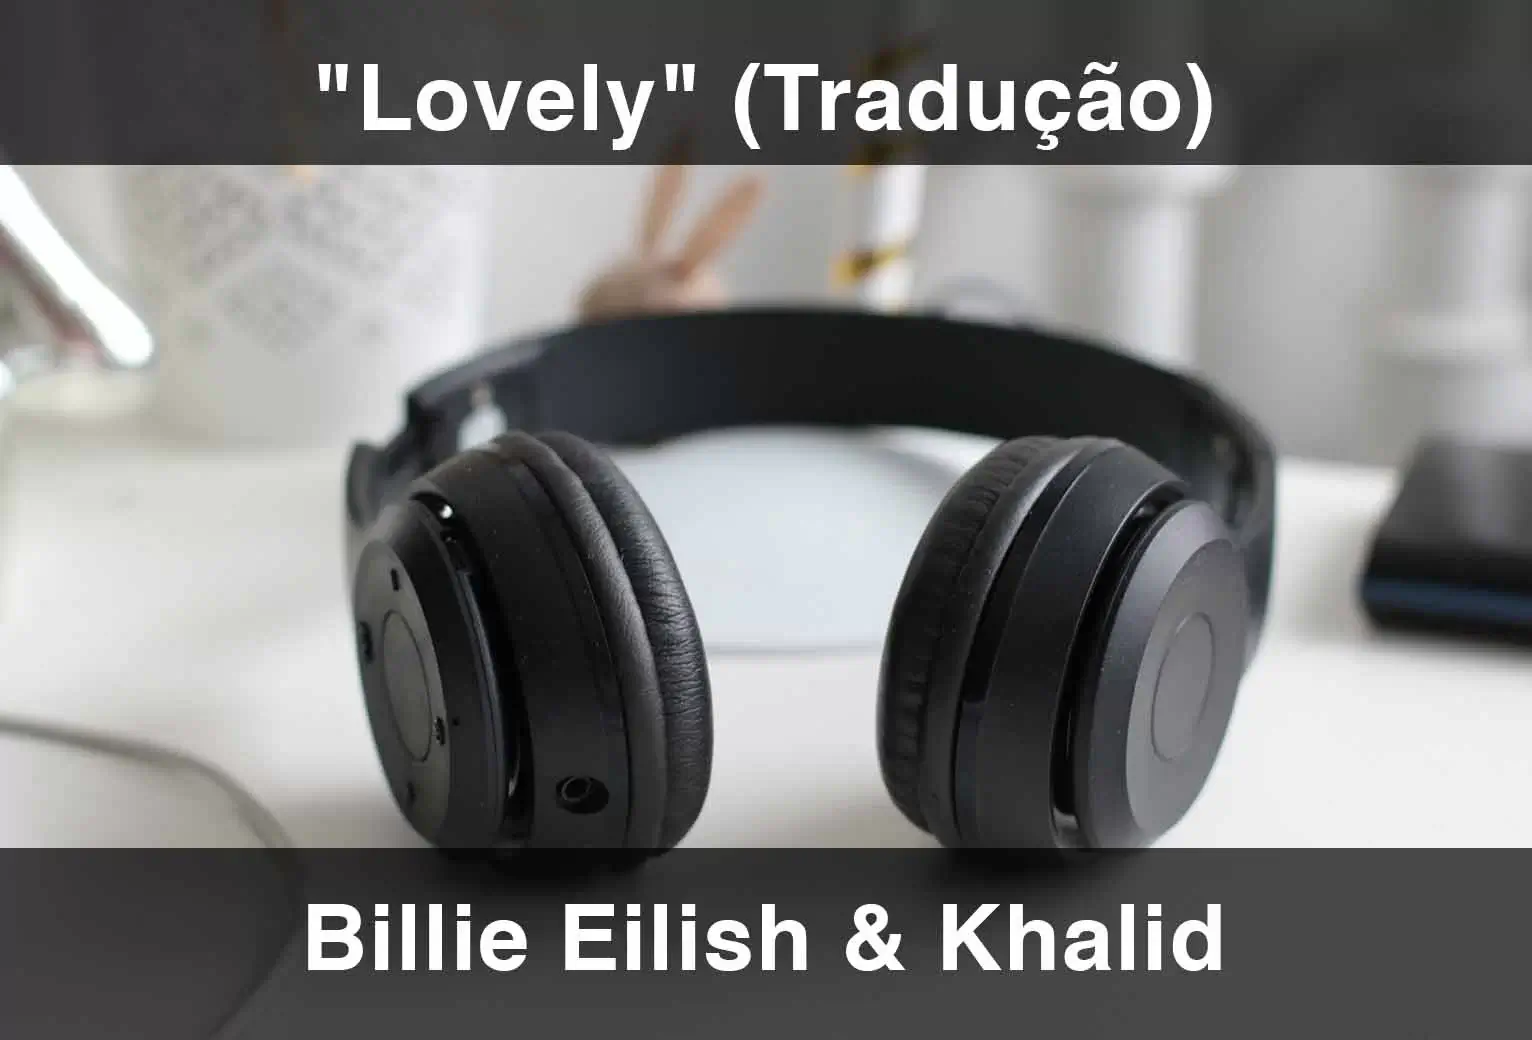 TRADUÇÃO) Lovely - Billie Eilish (With Khalid) 